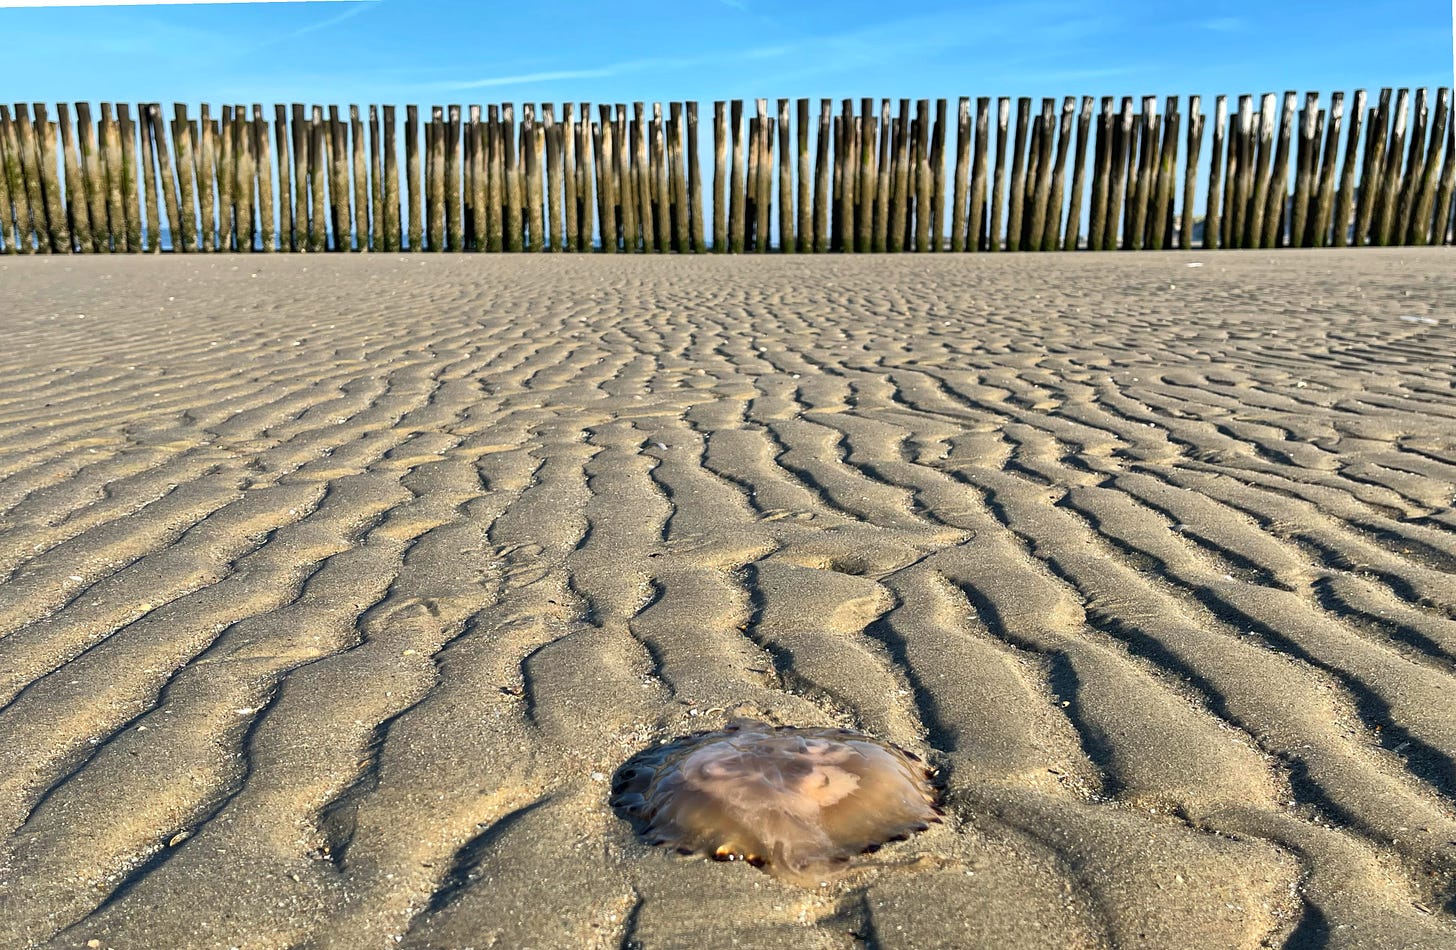 photo of jellyfish in Zeeland, the Netherlands, taken by Alexander Verbeek for ThePlanet.substack.com